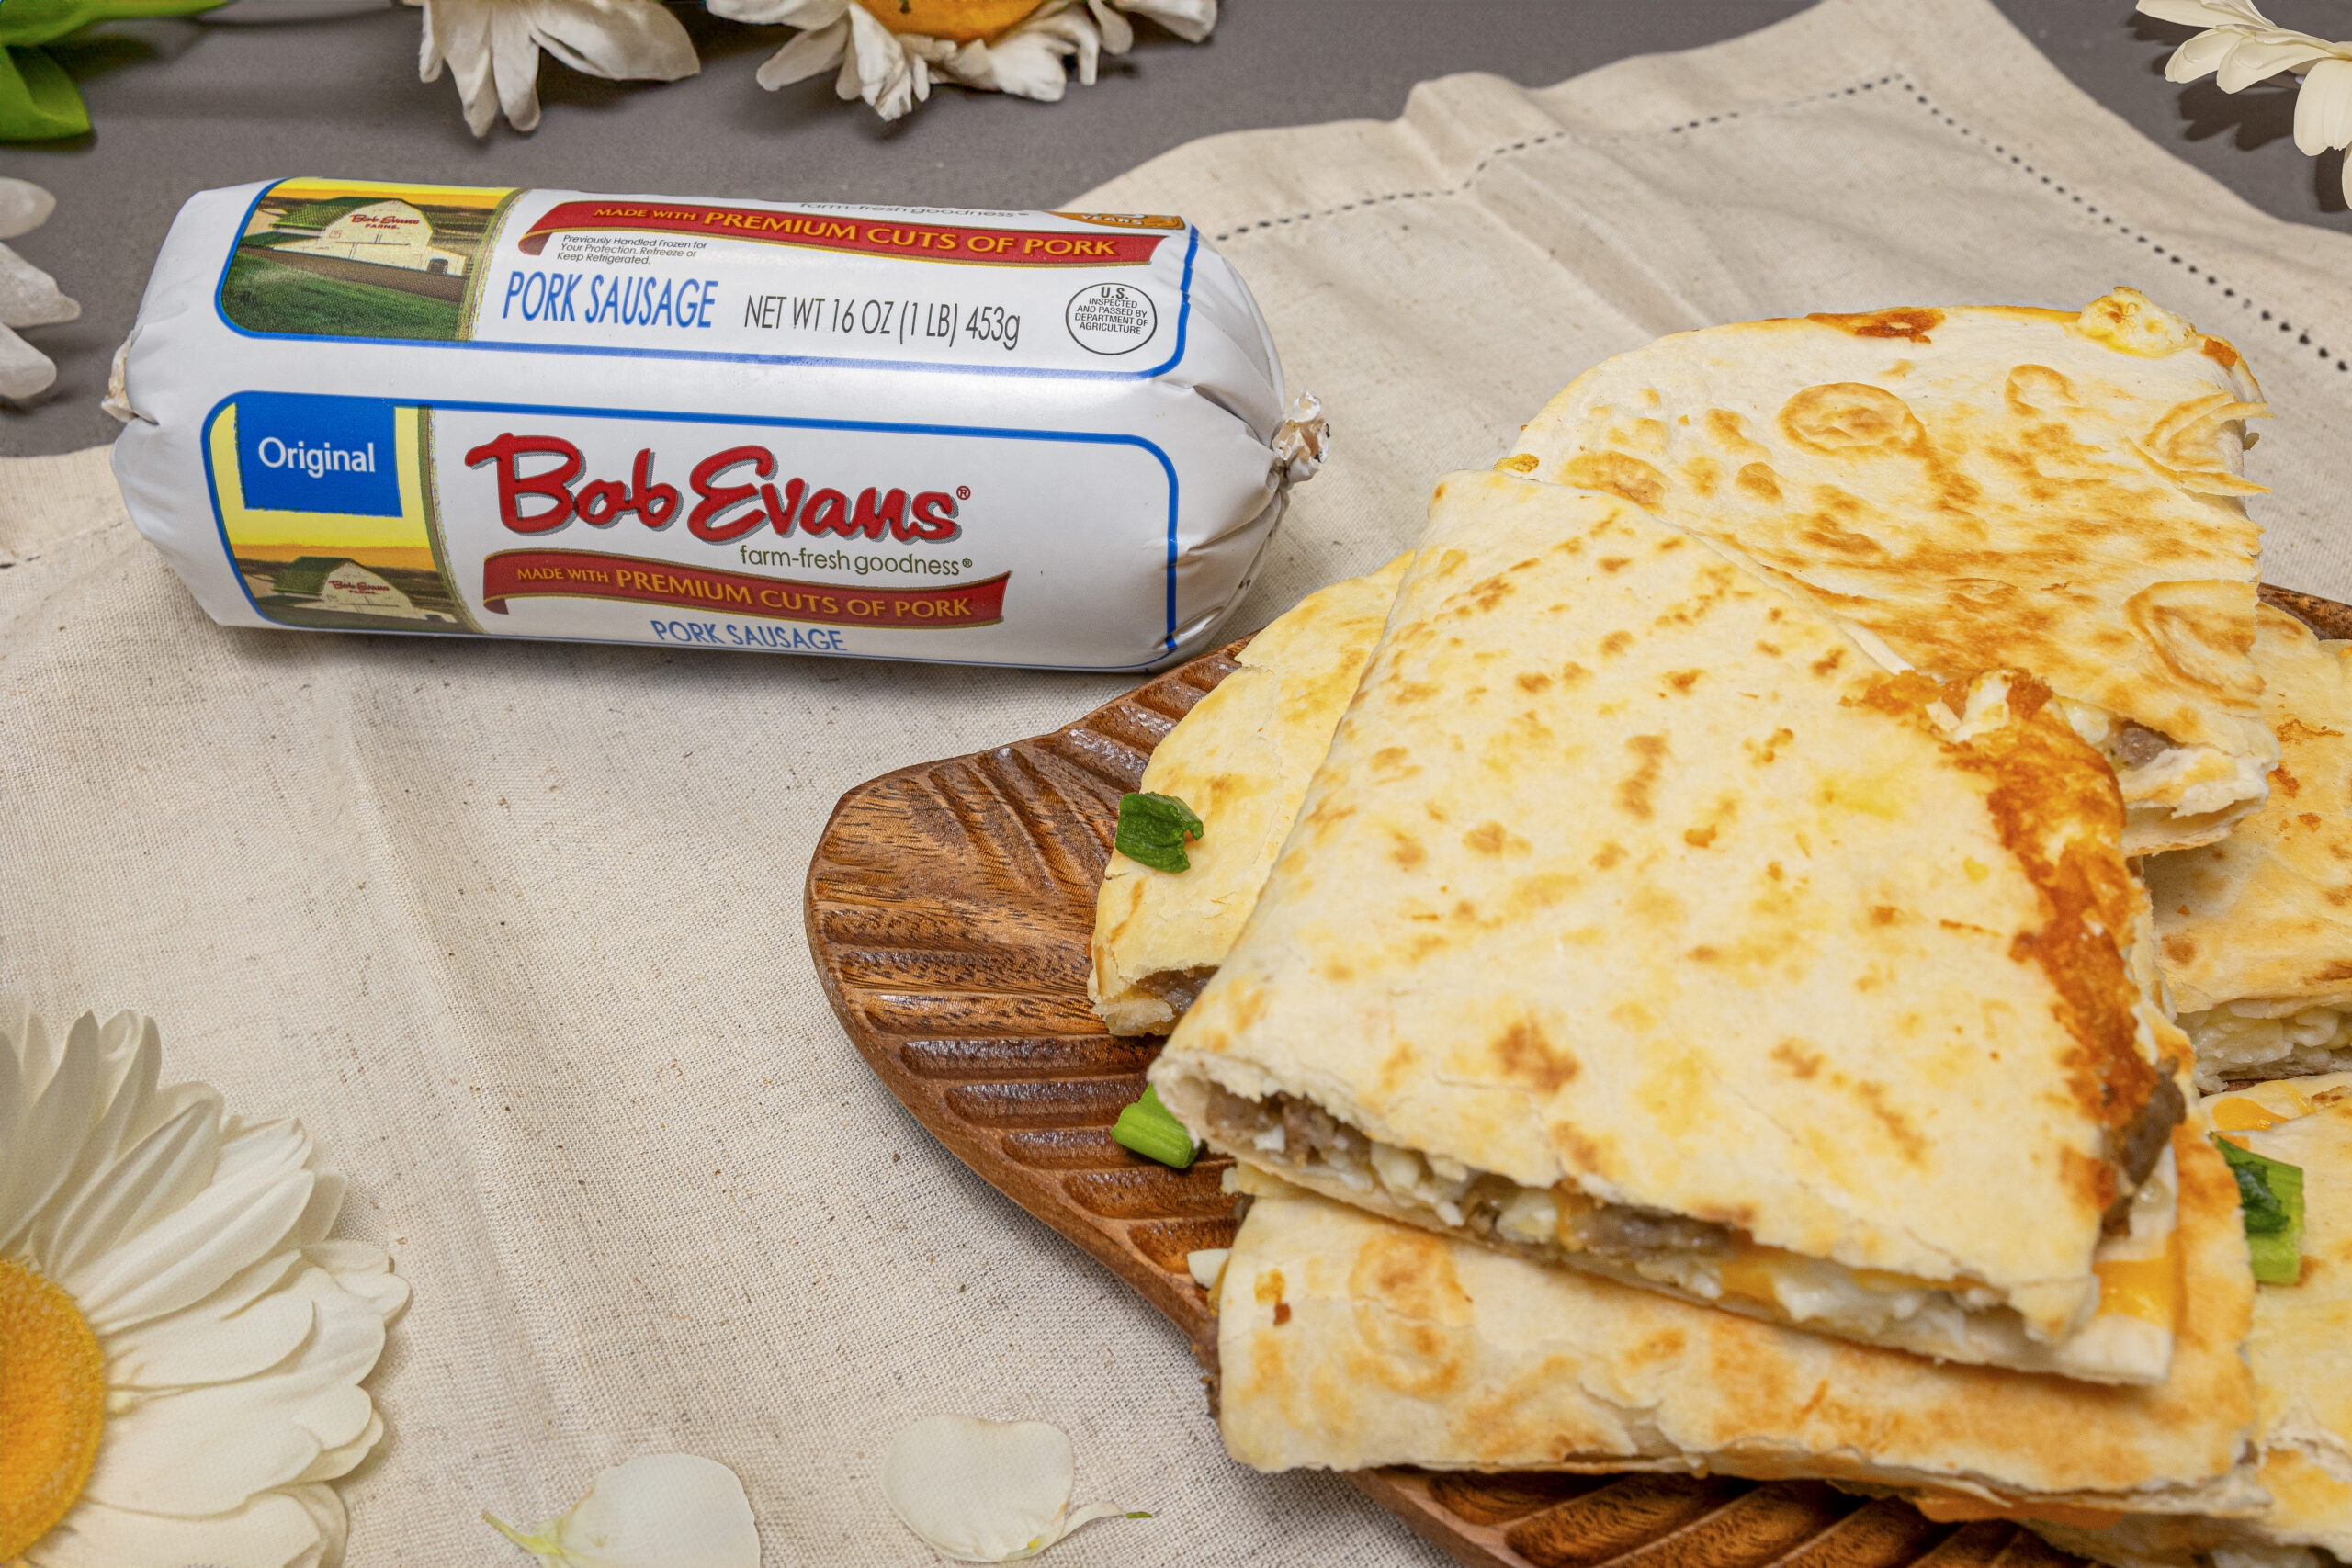 sausage egg and cheese quesadillas with Bob Evans Original Roll Sausage